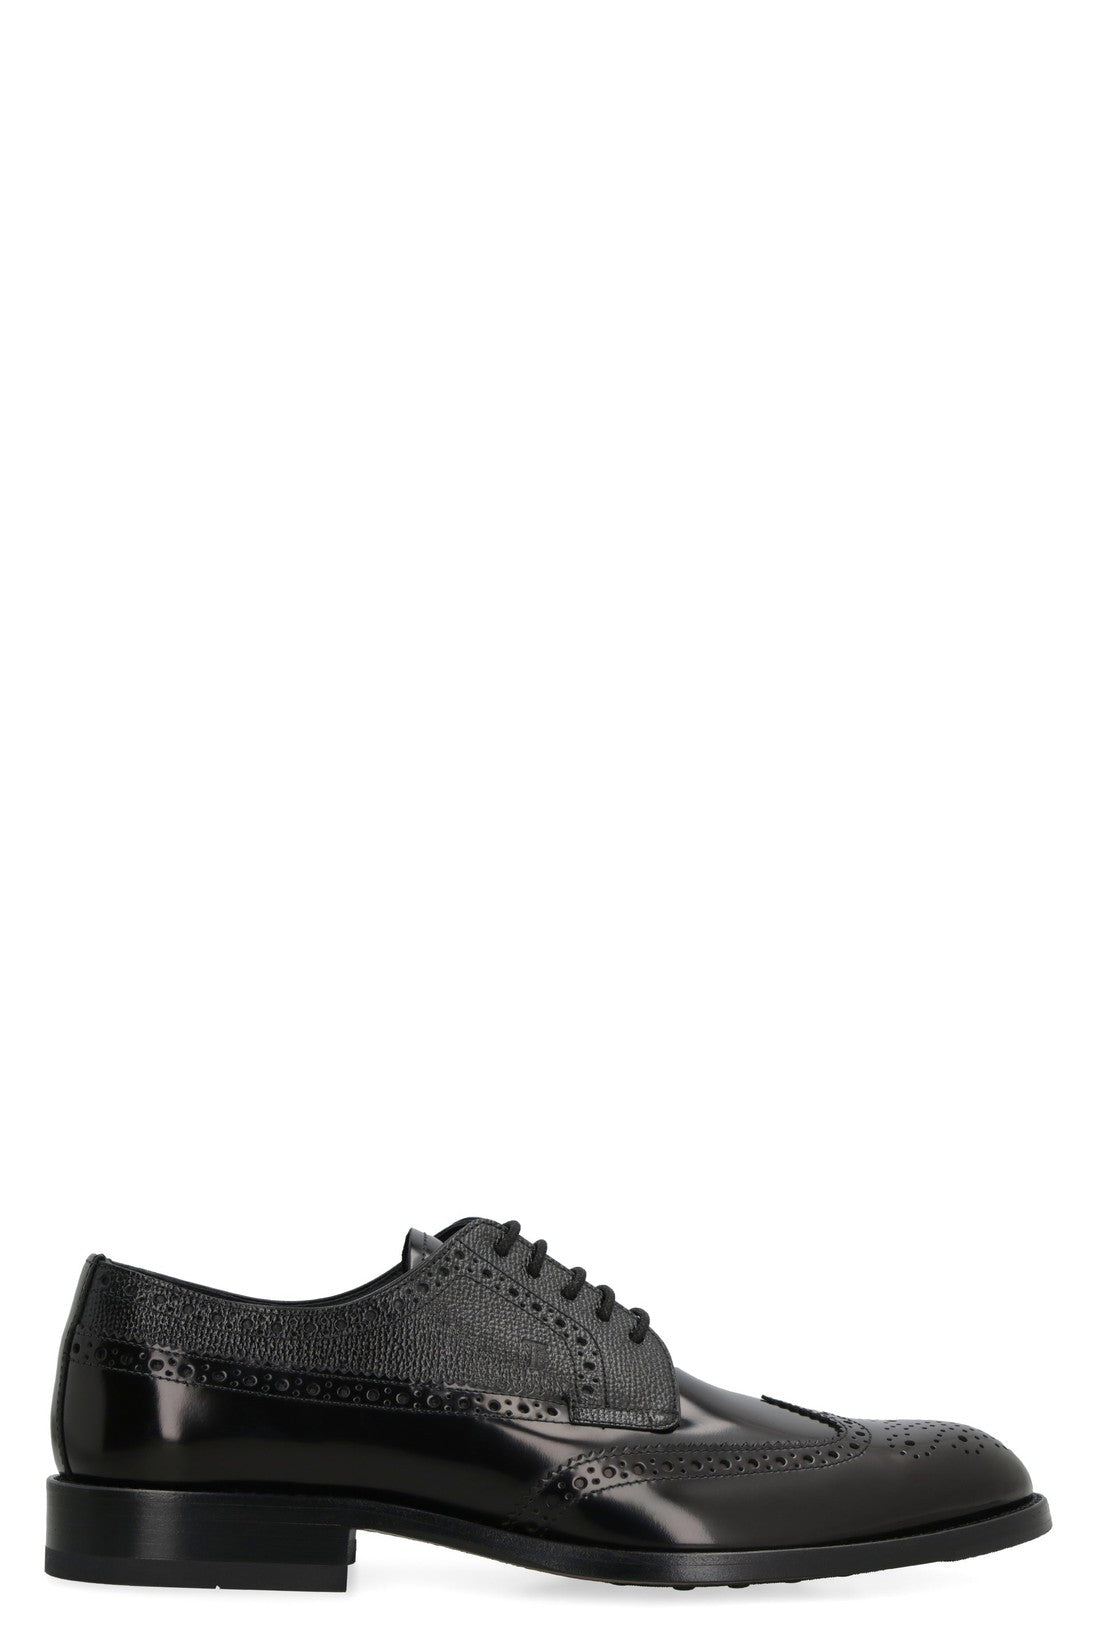 Tod's-OUTLET-SALE-Leather lace-up shoes-ARCHIVIST